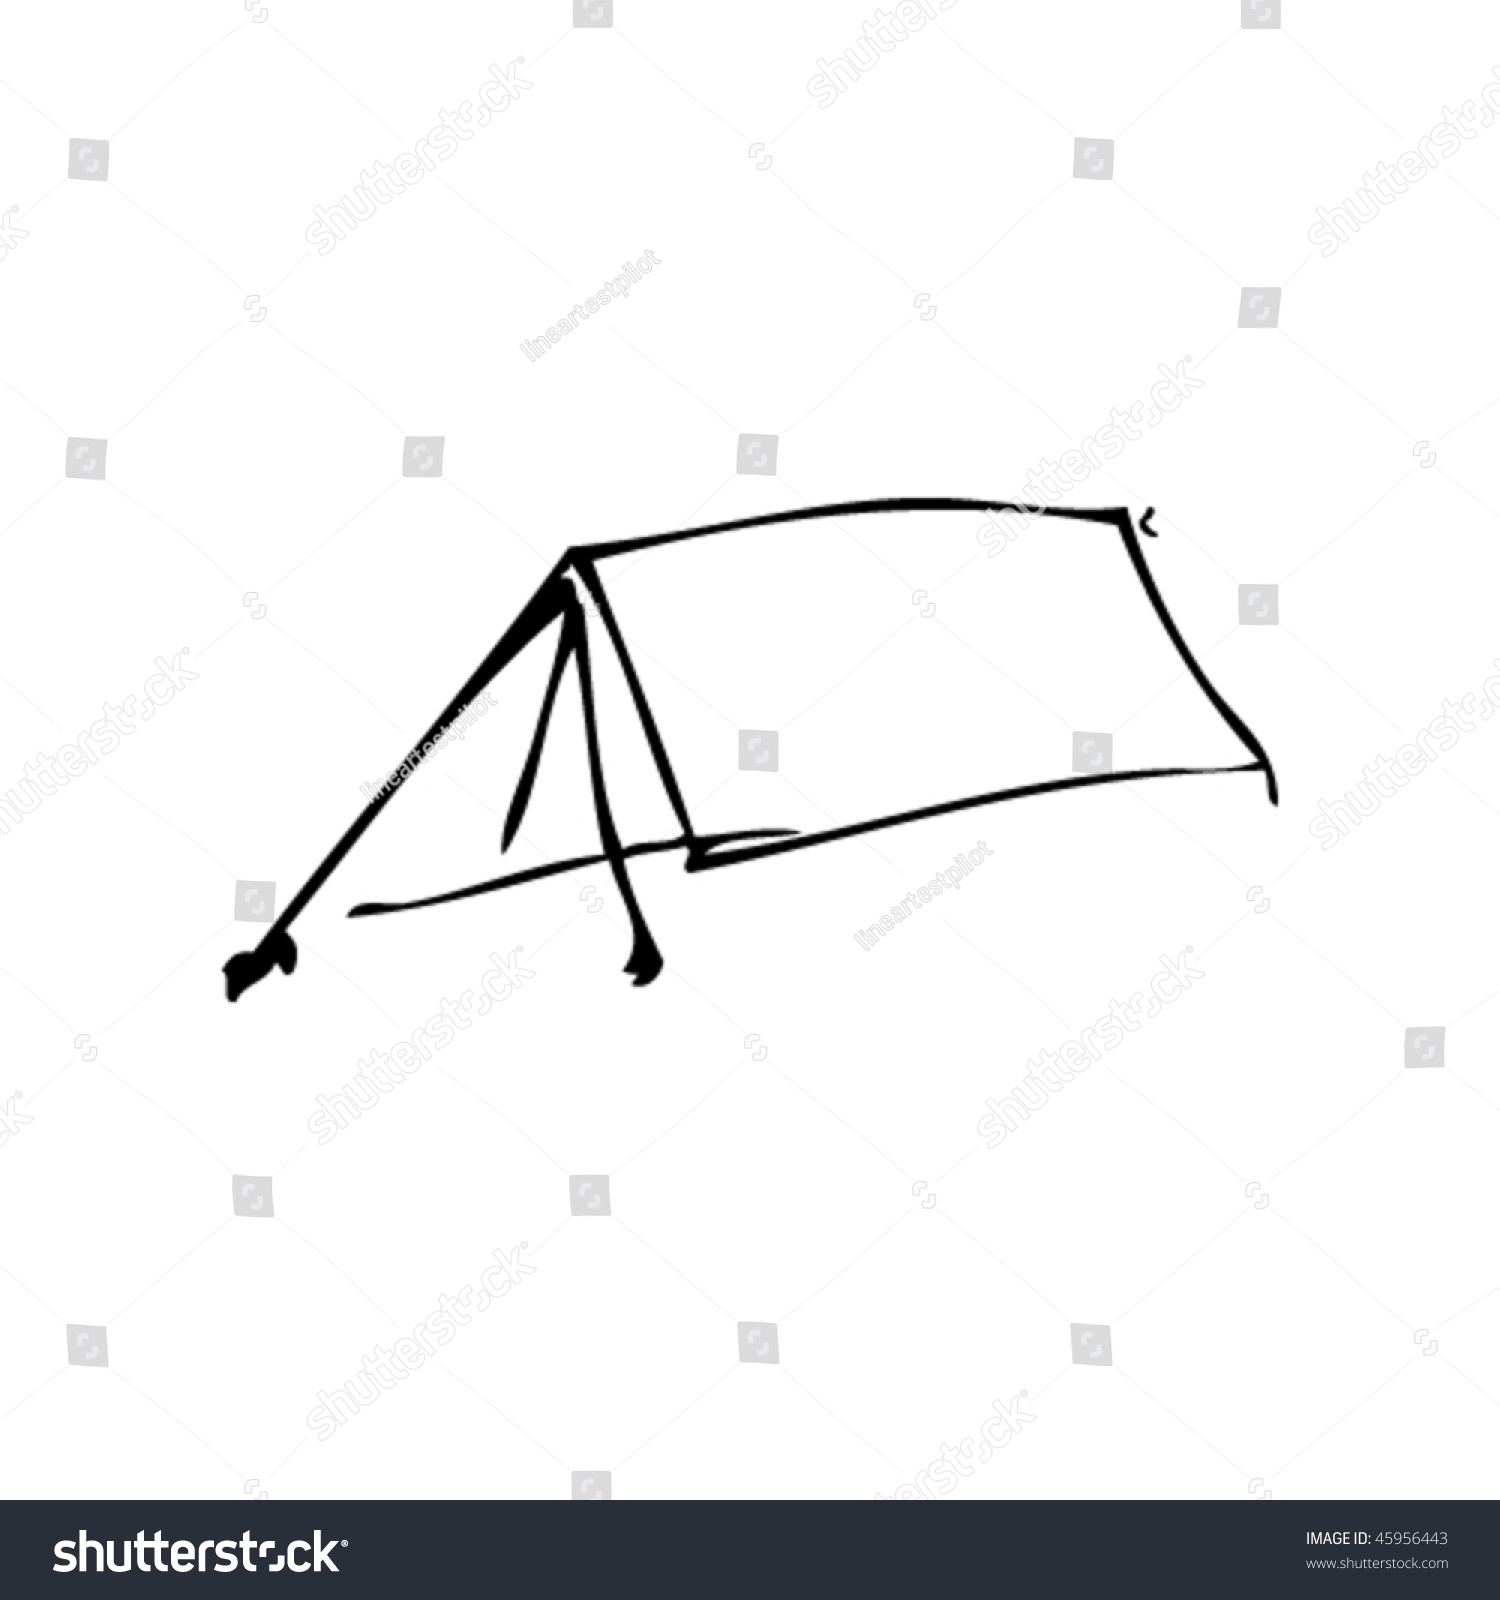 Quick Drawing Tent Stock Vector 45956443 - Shutterstock